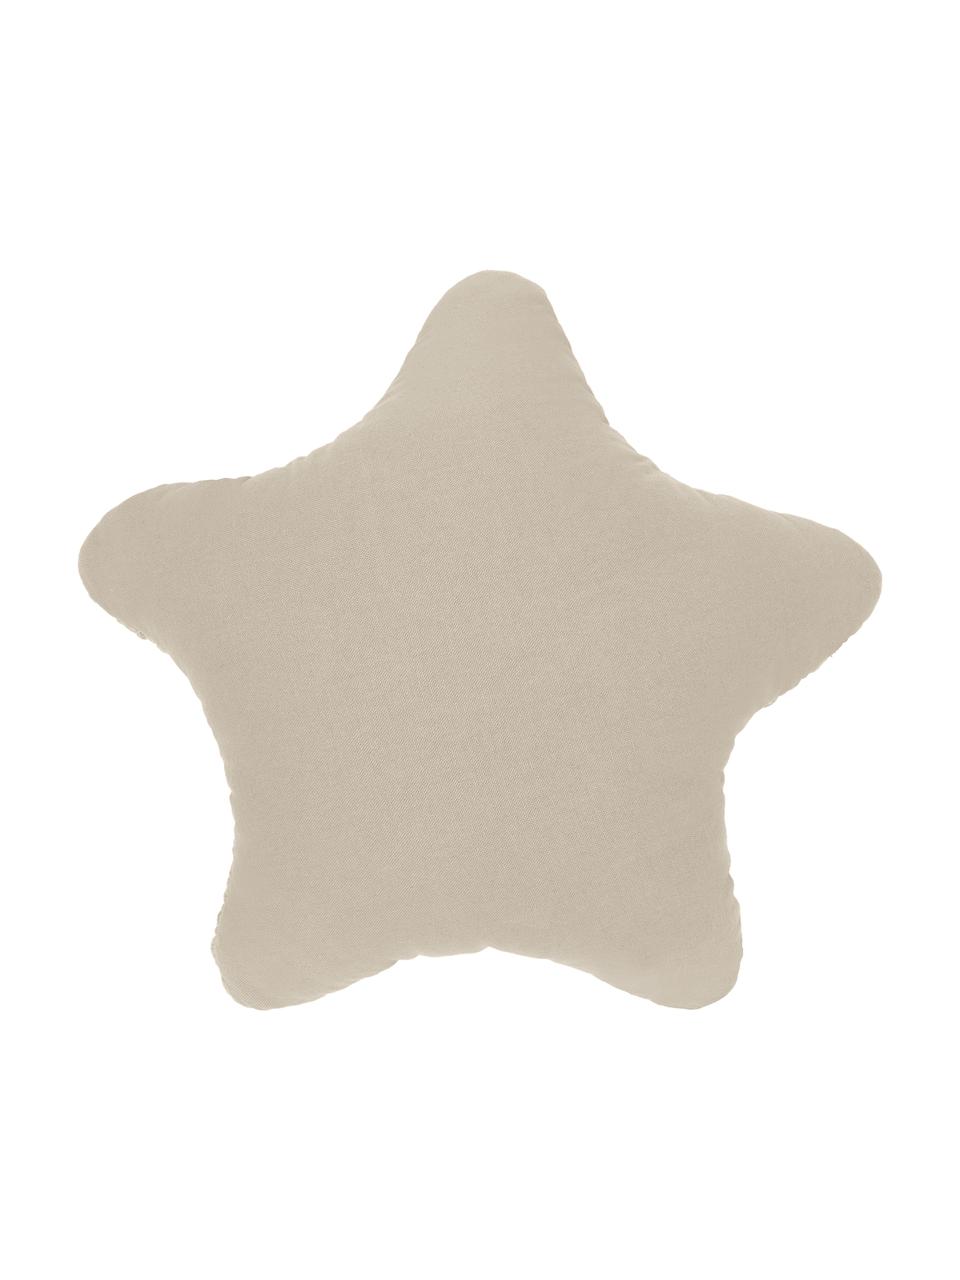 Cojín de punto grueso Sparkle, con relleno, Funda: 100% algodón, Beige, An 45 x L 45 cm